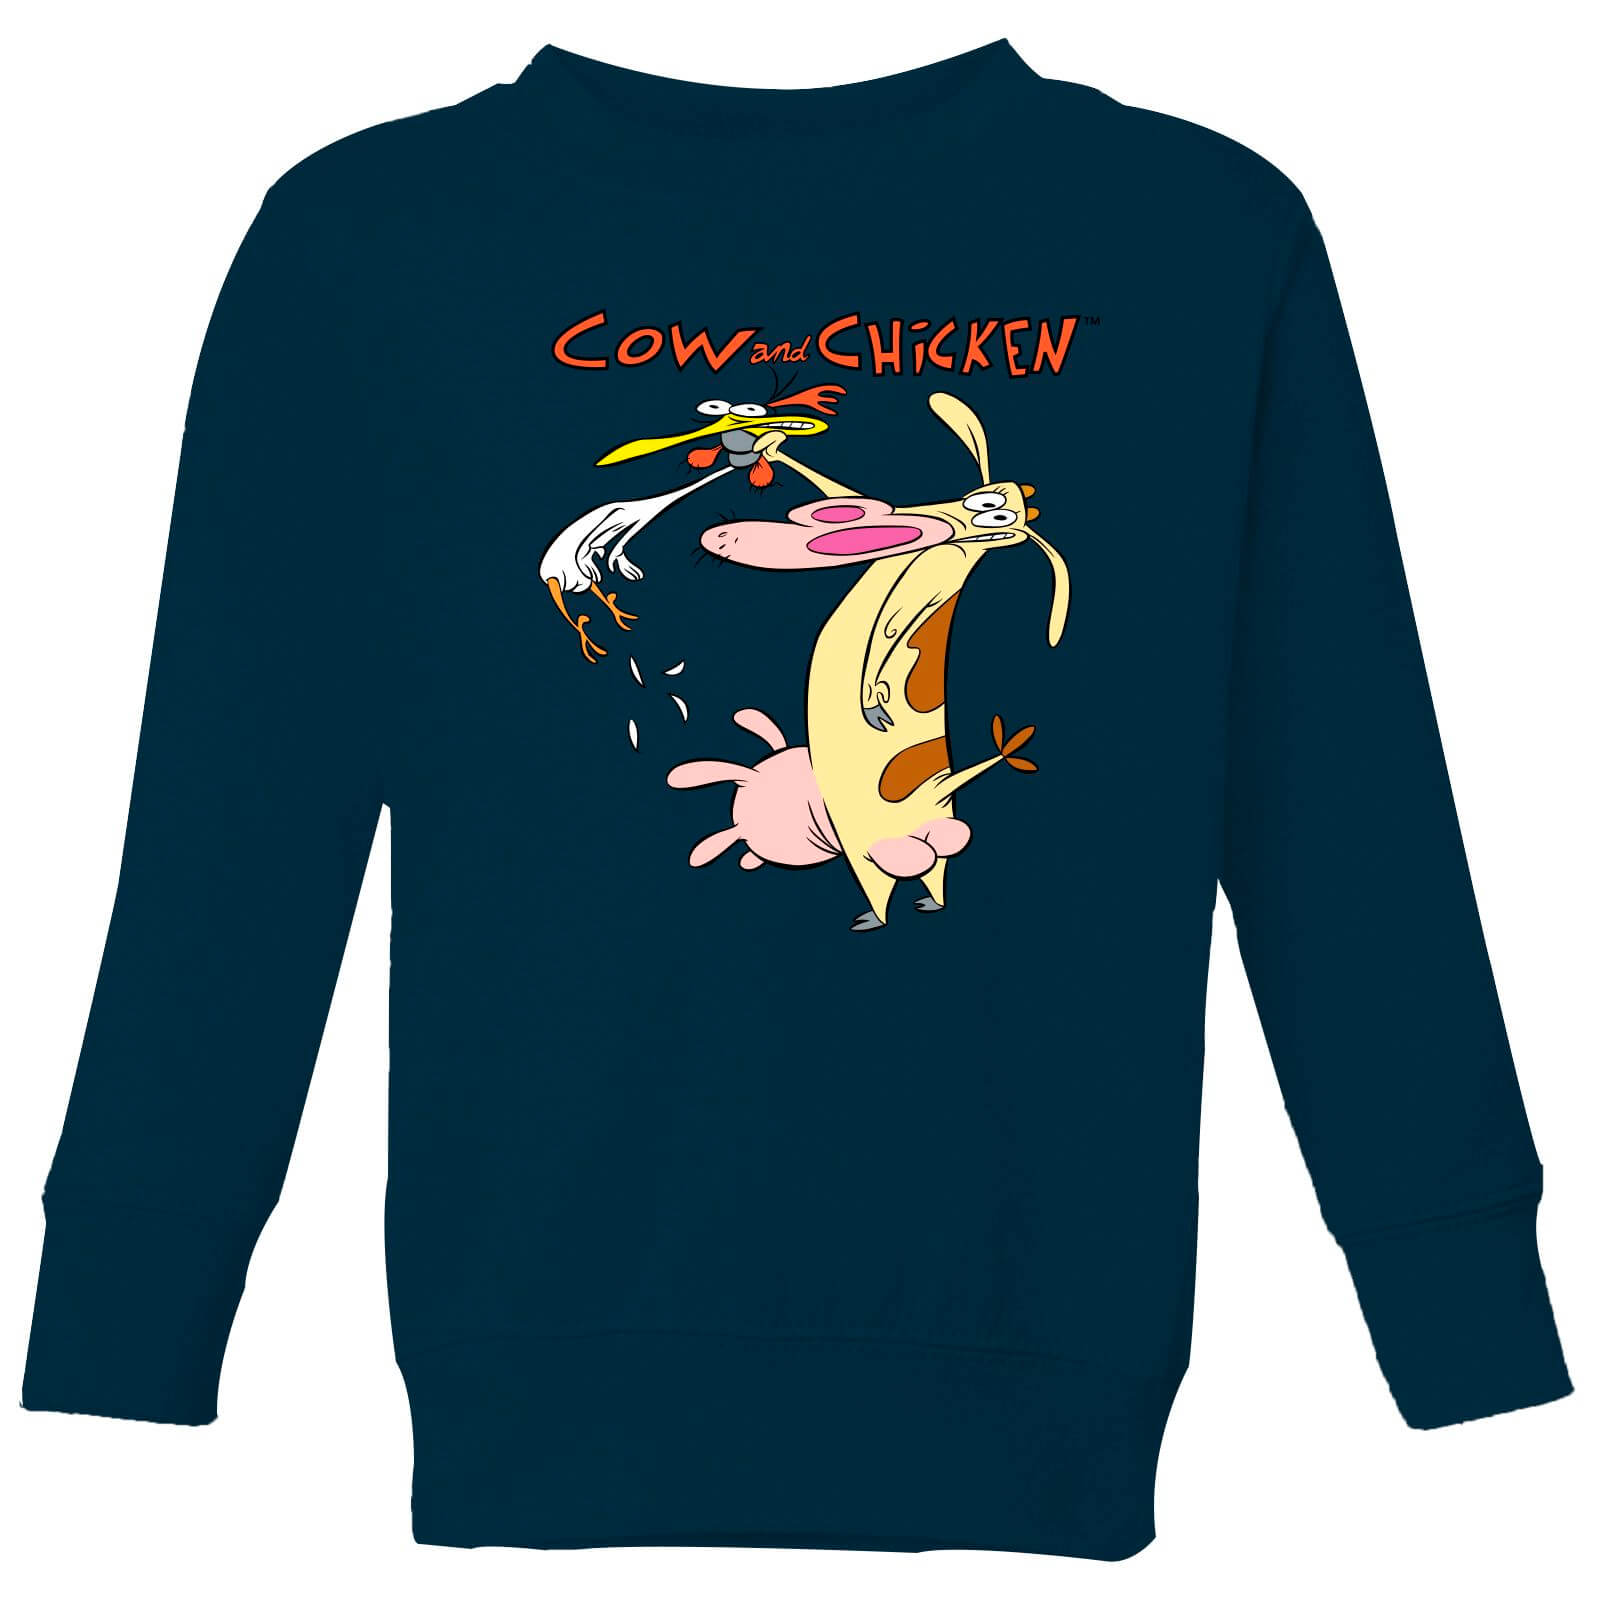 Cow and Chicken Characters Kids' Sweatshirt - Navy - 9-10 Years - Navy